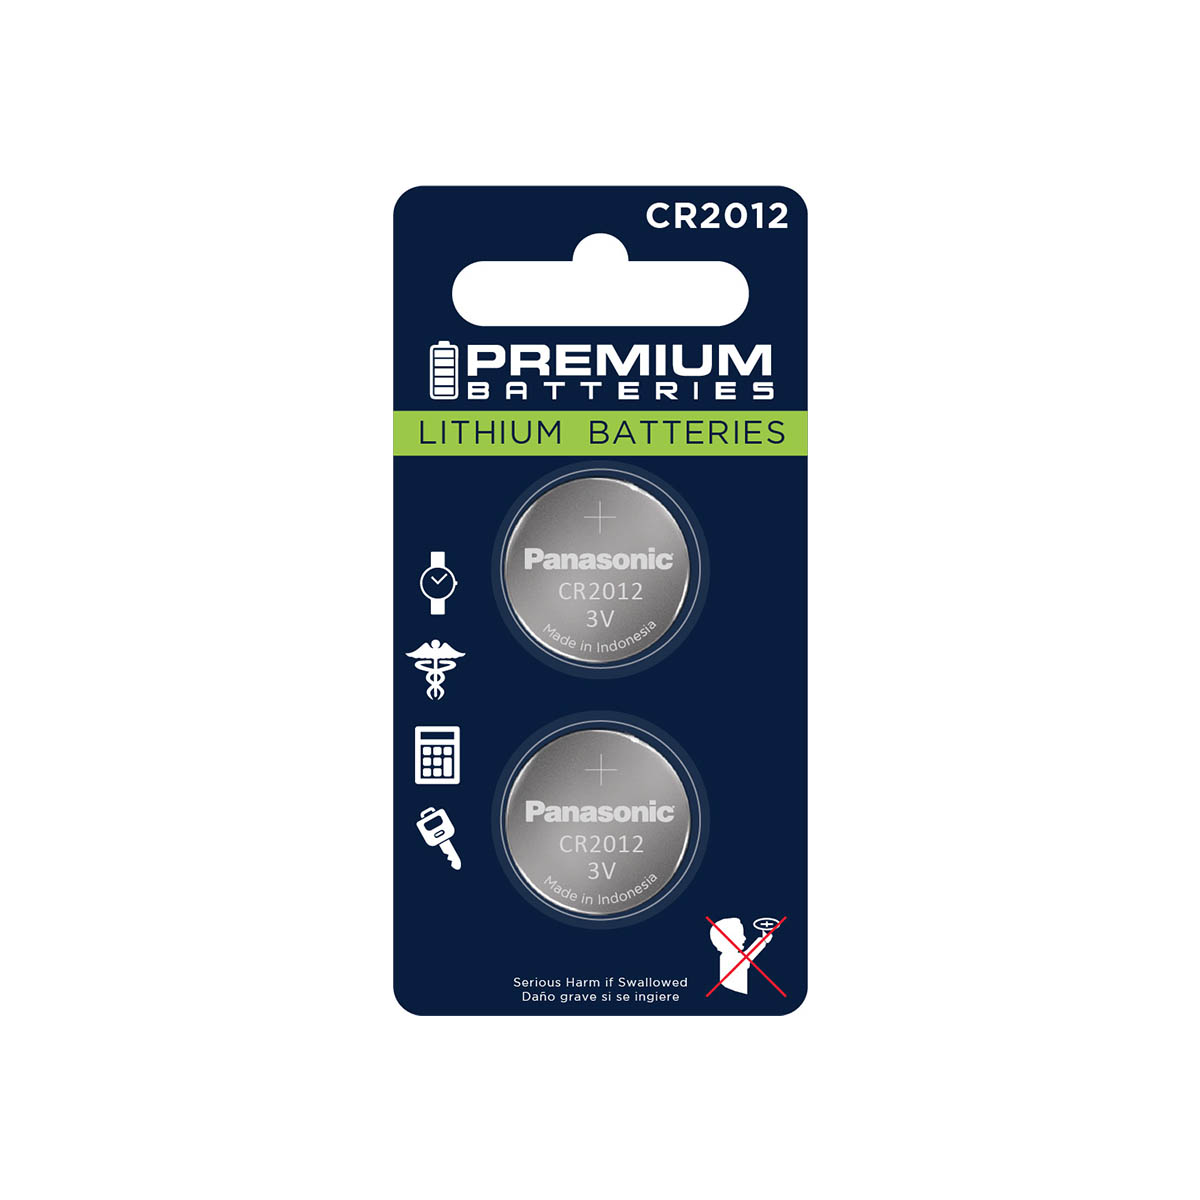 Premium Batteries CR2012 Battery 3V Lithium Coin Cell (2 Panasonic Batteries) (Child Resistant Packaging)